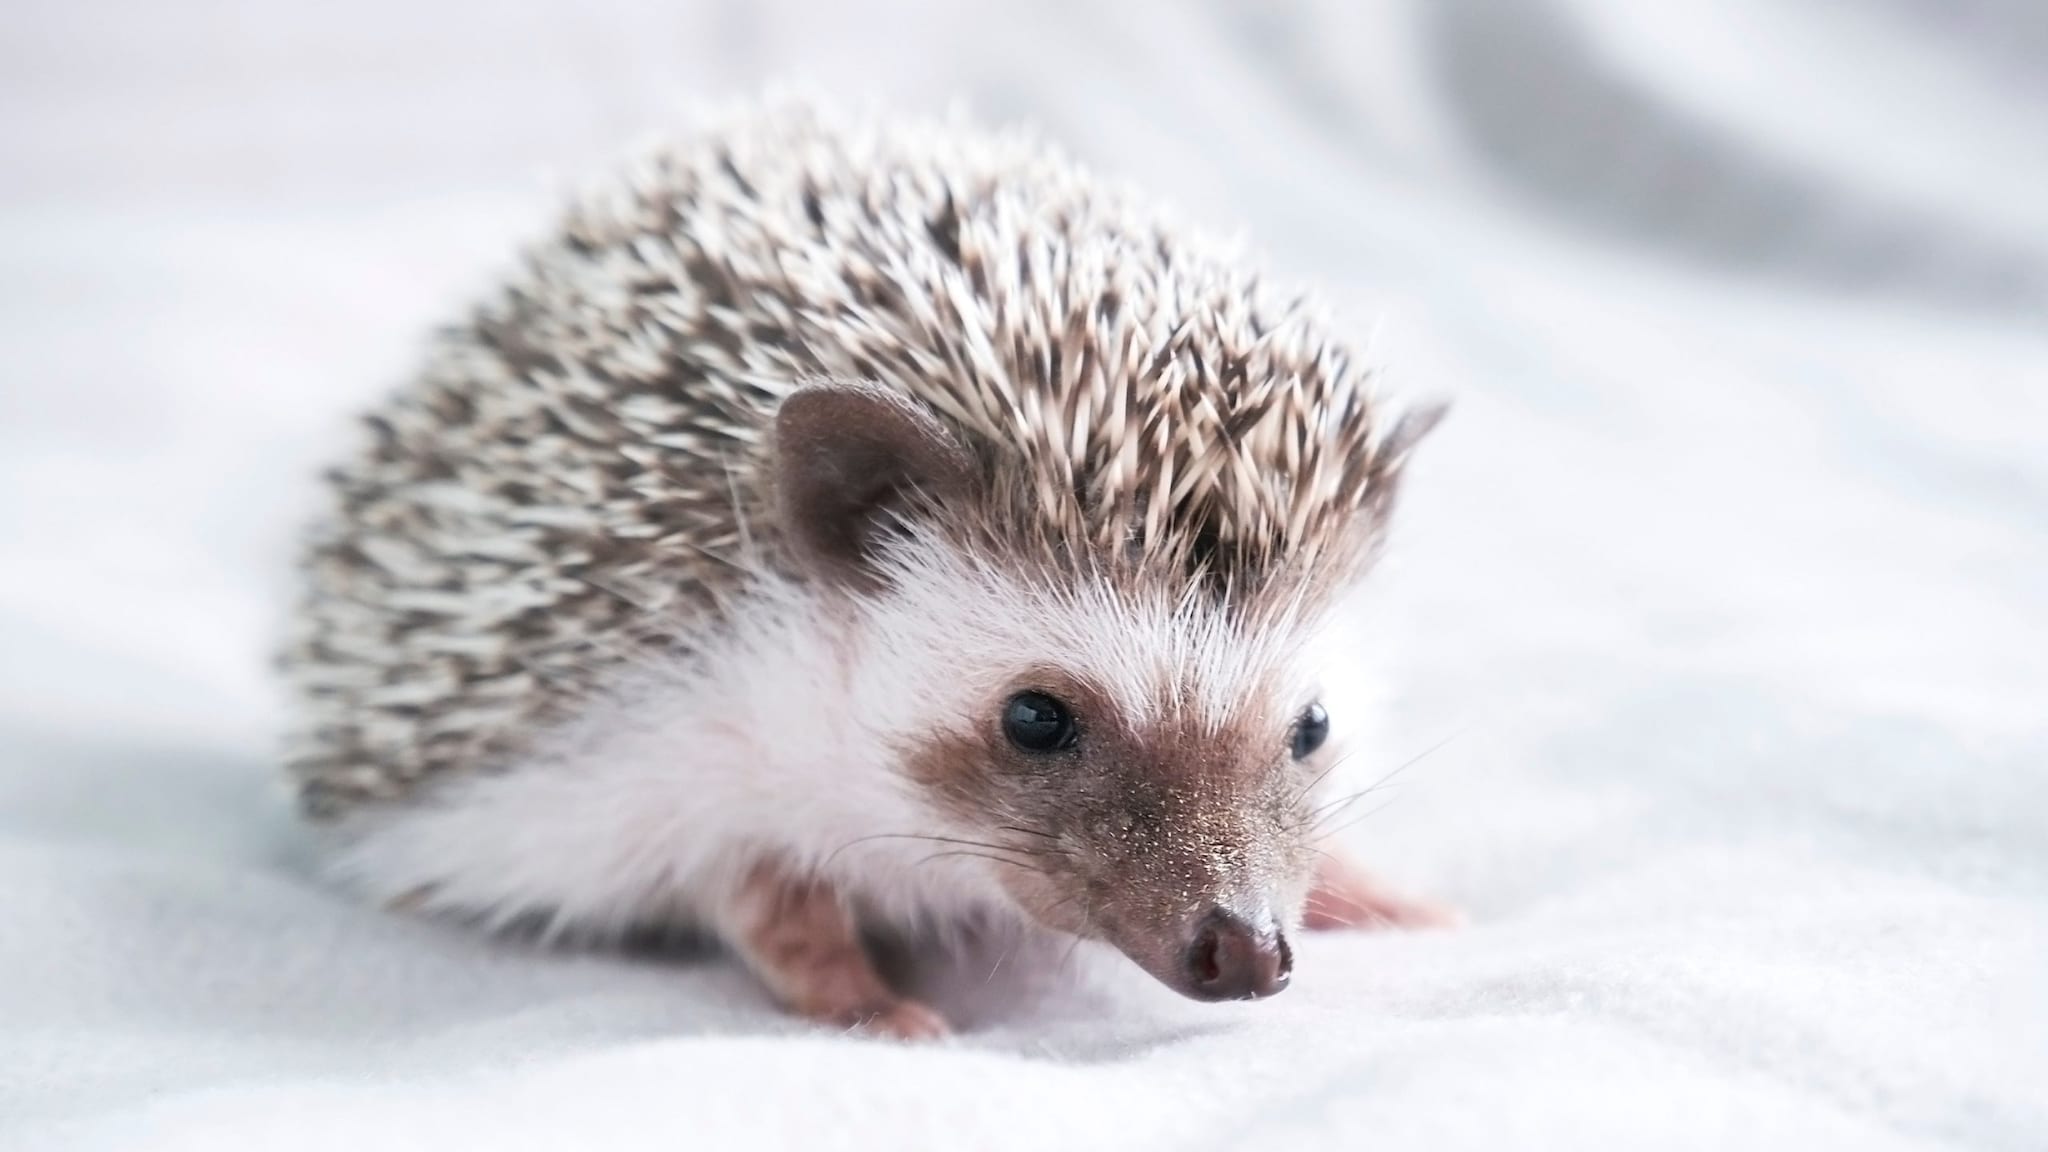 Photo of a hedgehog